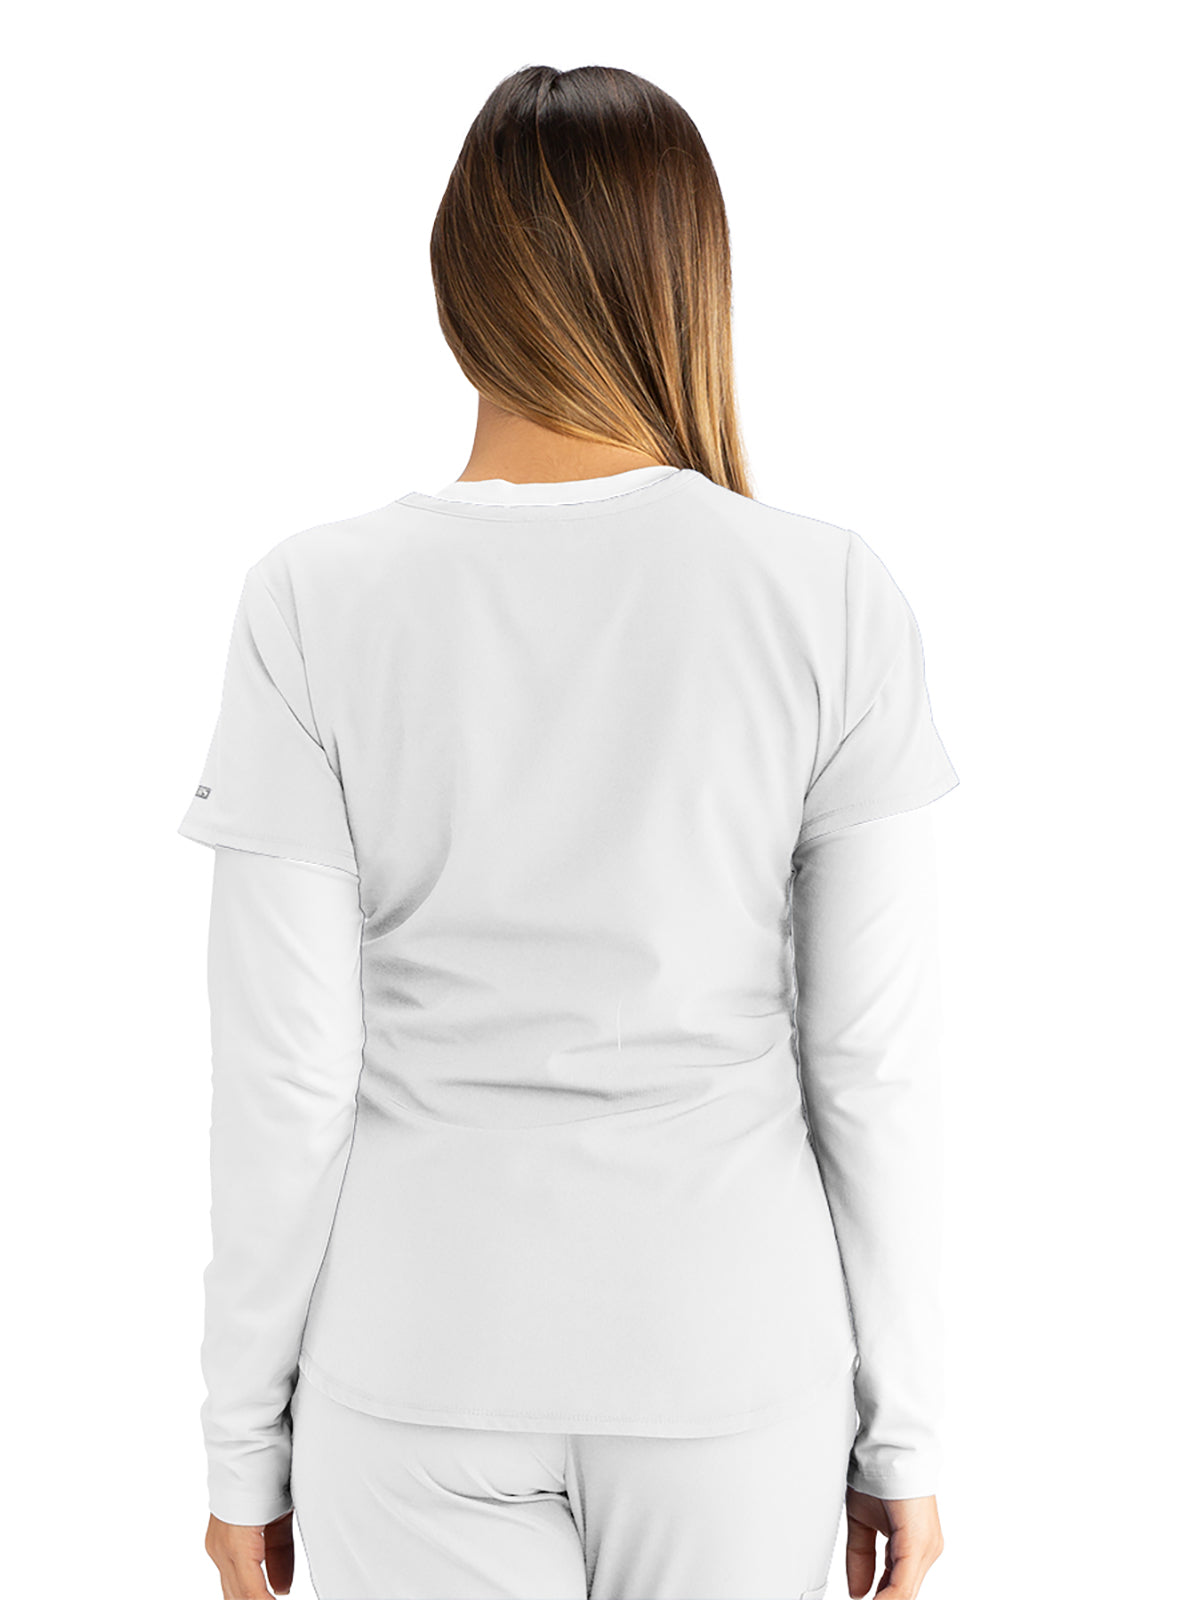 Skechers 3-Pocket Virtual V-Neck Vitality Scrub Top for Women - White